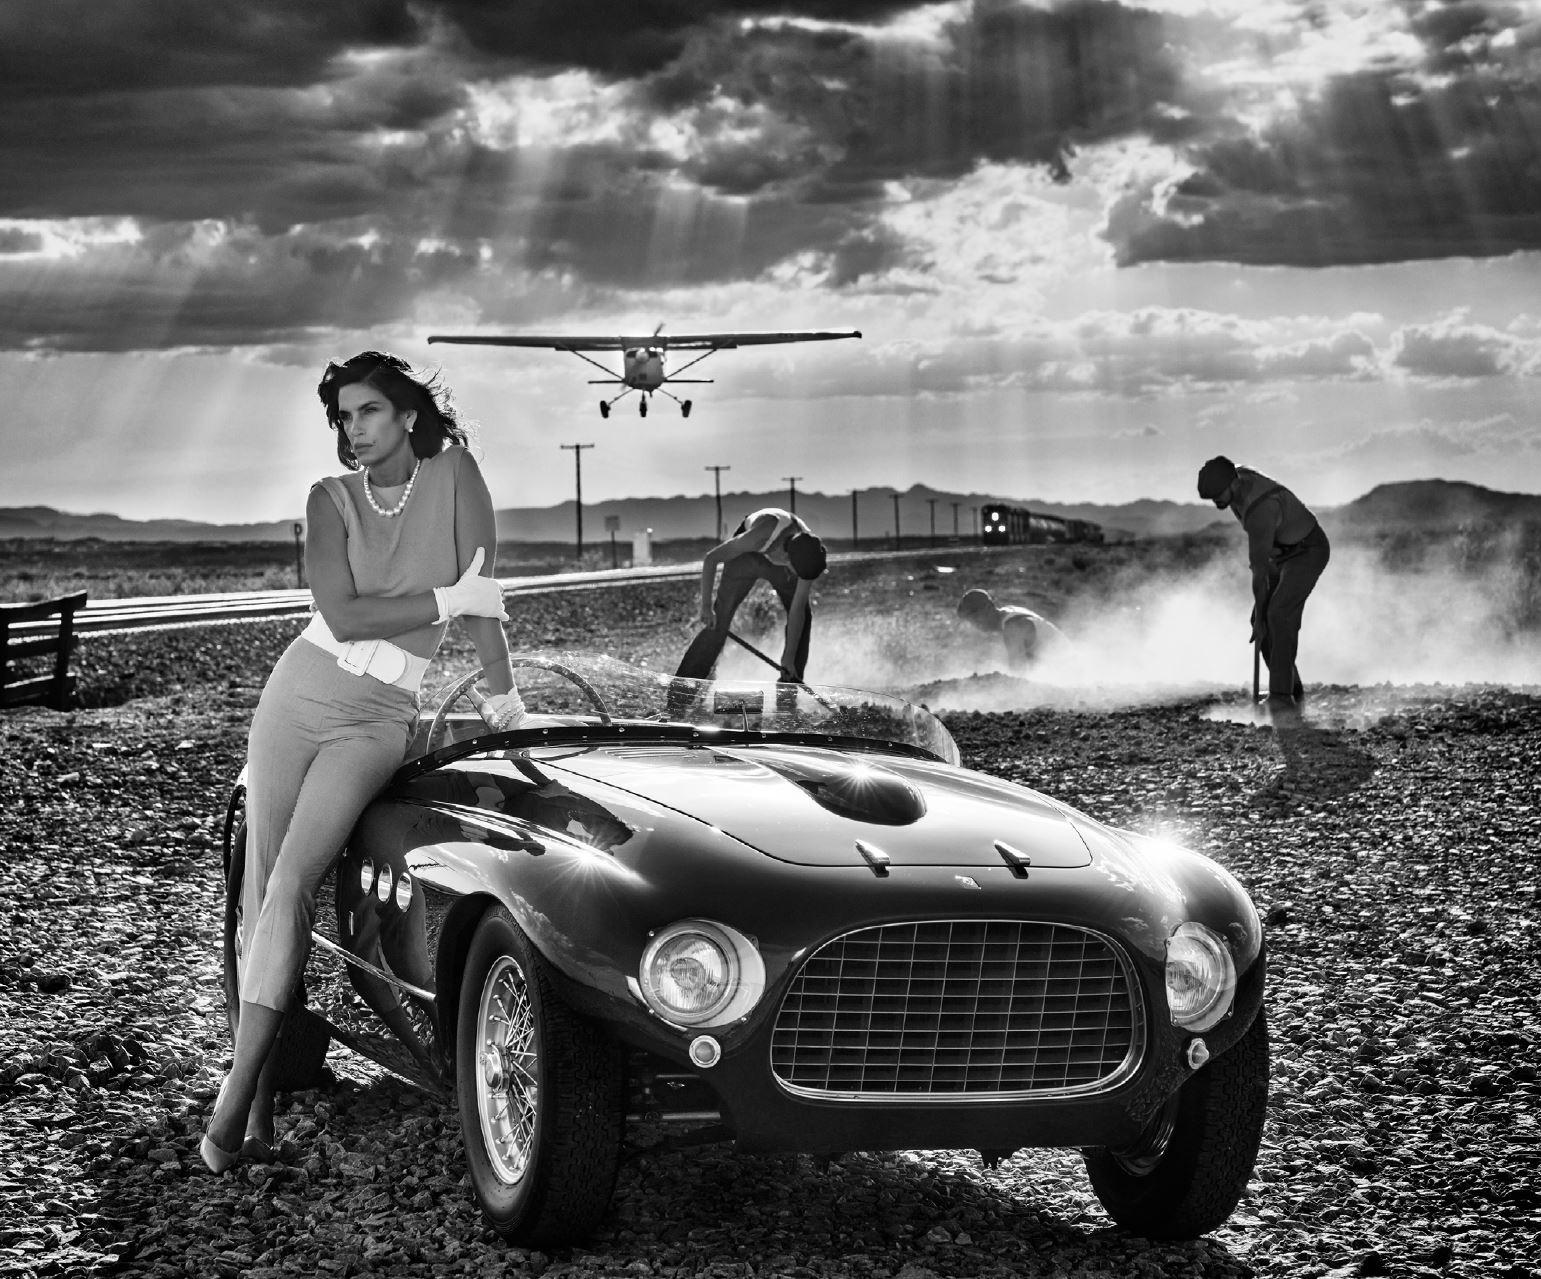 David Yarrow Figurative Photograph - Planes, Trains and Automobiles - Supermodel Cindy Crawford with vintage Ferrari